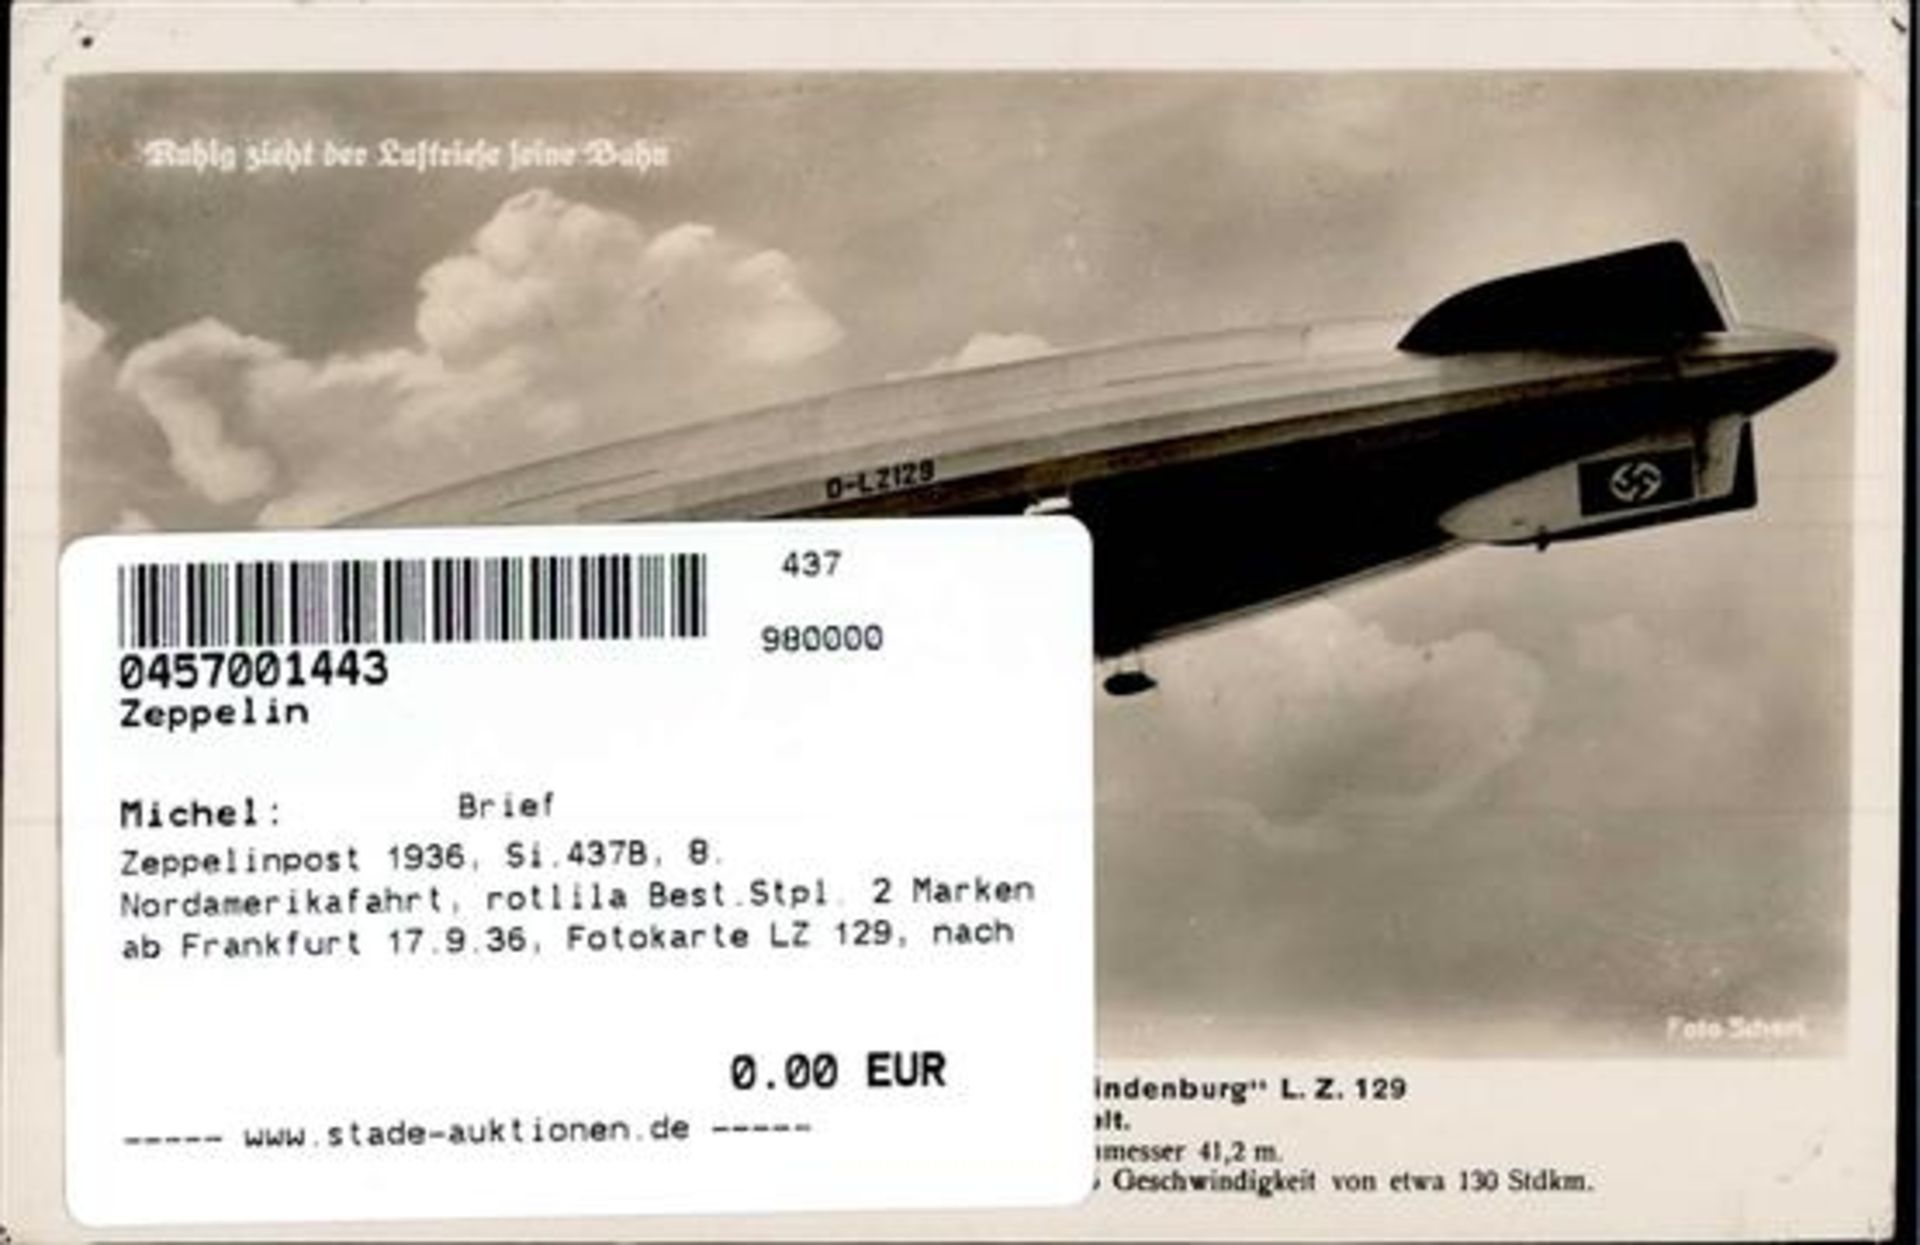 Zeppelinpost 1936, Si.437B, 8. Nordamerikafahrt, rotlila Best.Stpl. 2 Marken ab Frankfurt 17.9.36, - Bild 2 aus 2